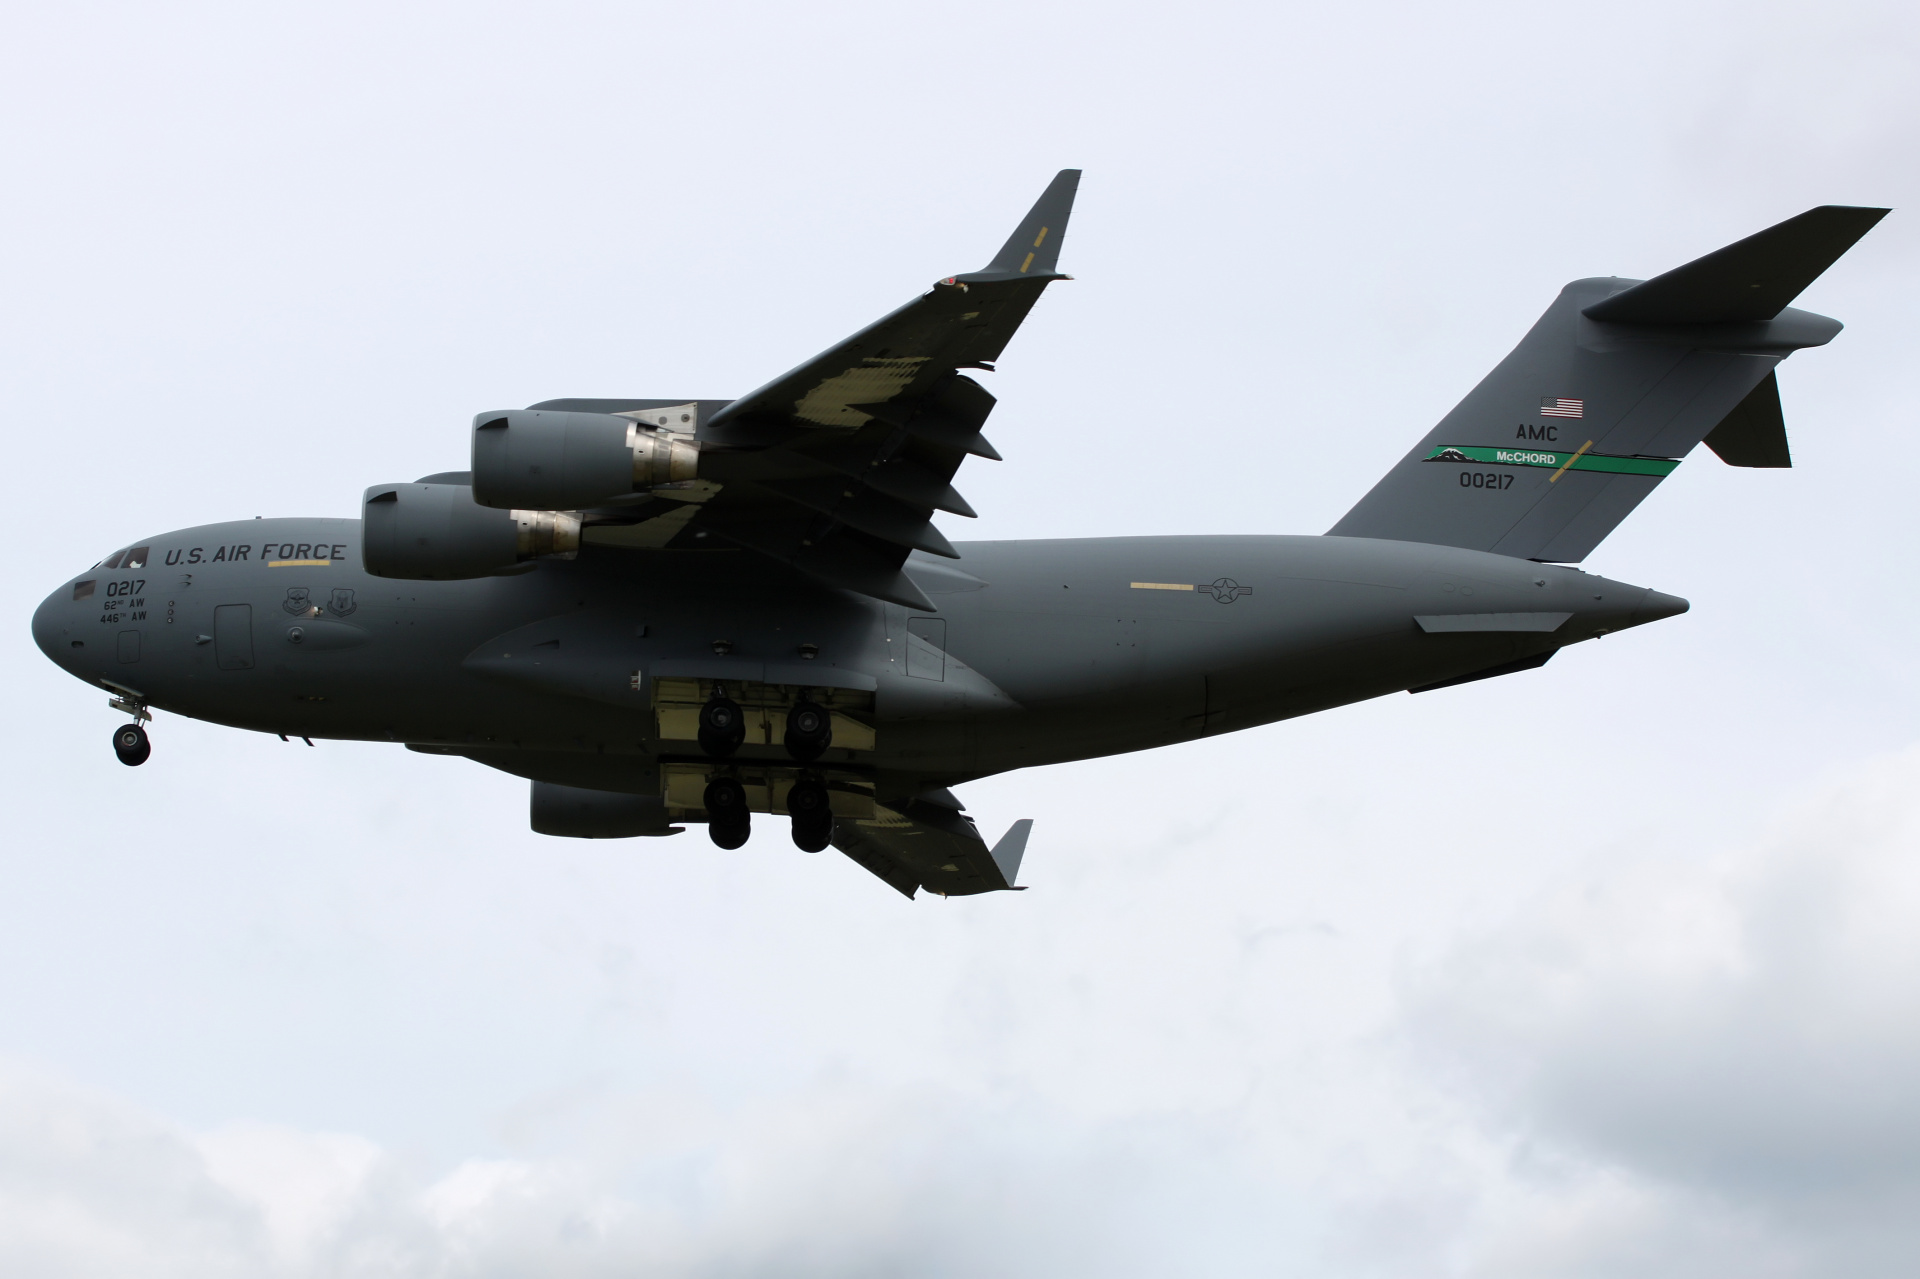 10-0217 (Aircraft » EPWA Spotting » Boeing/McDonnell Douglas C-17/C-17A Globemaster III » U.S. Air Force)